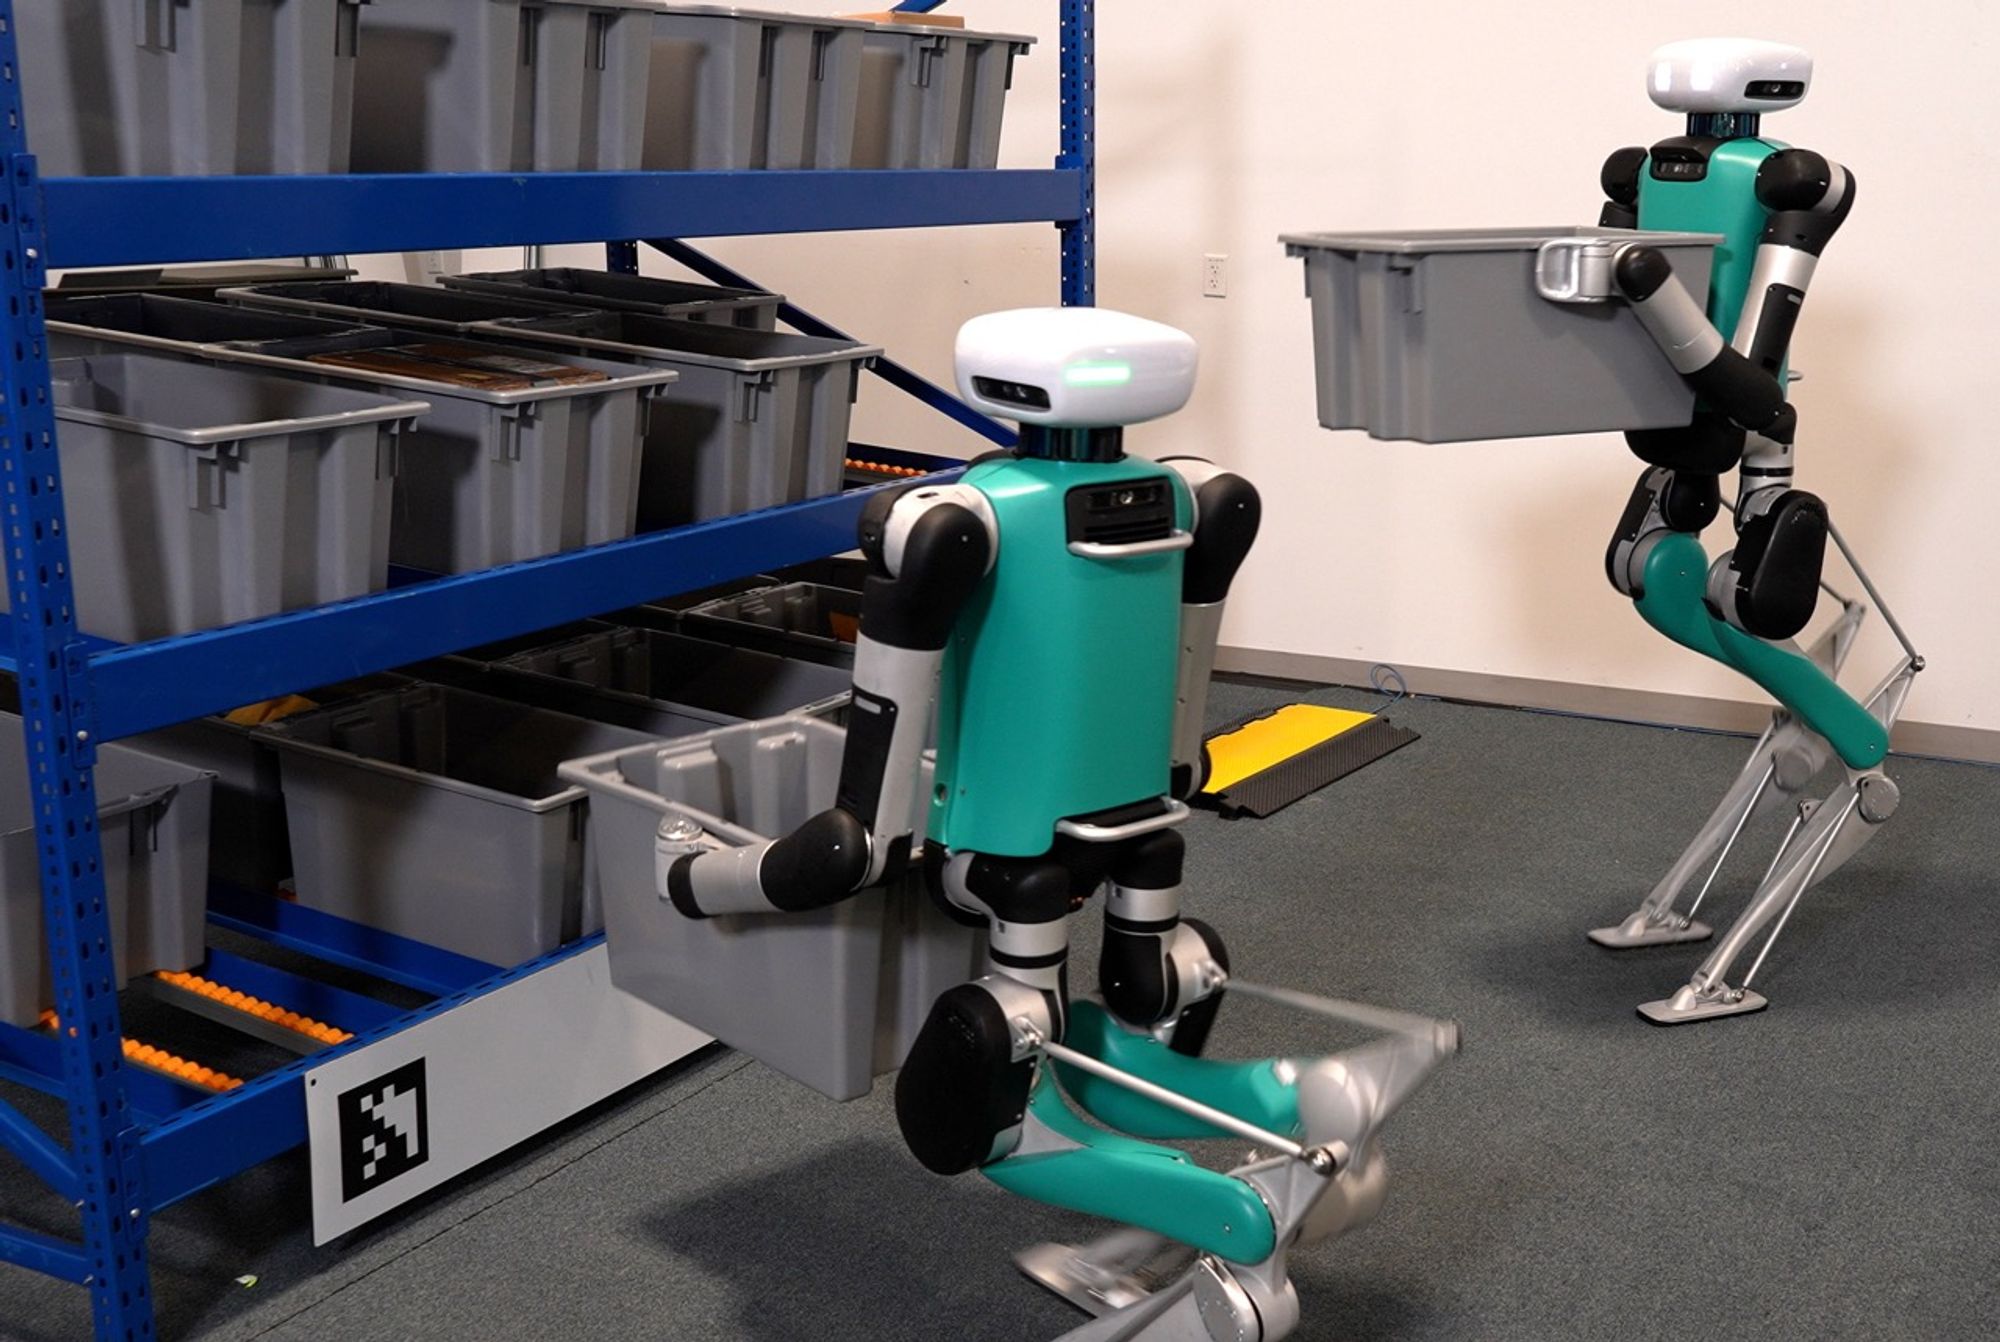 RoboFab is ready to build 10,000 humanoid robots per year | TechCrunch